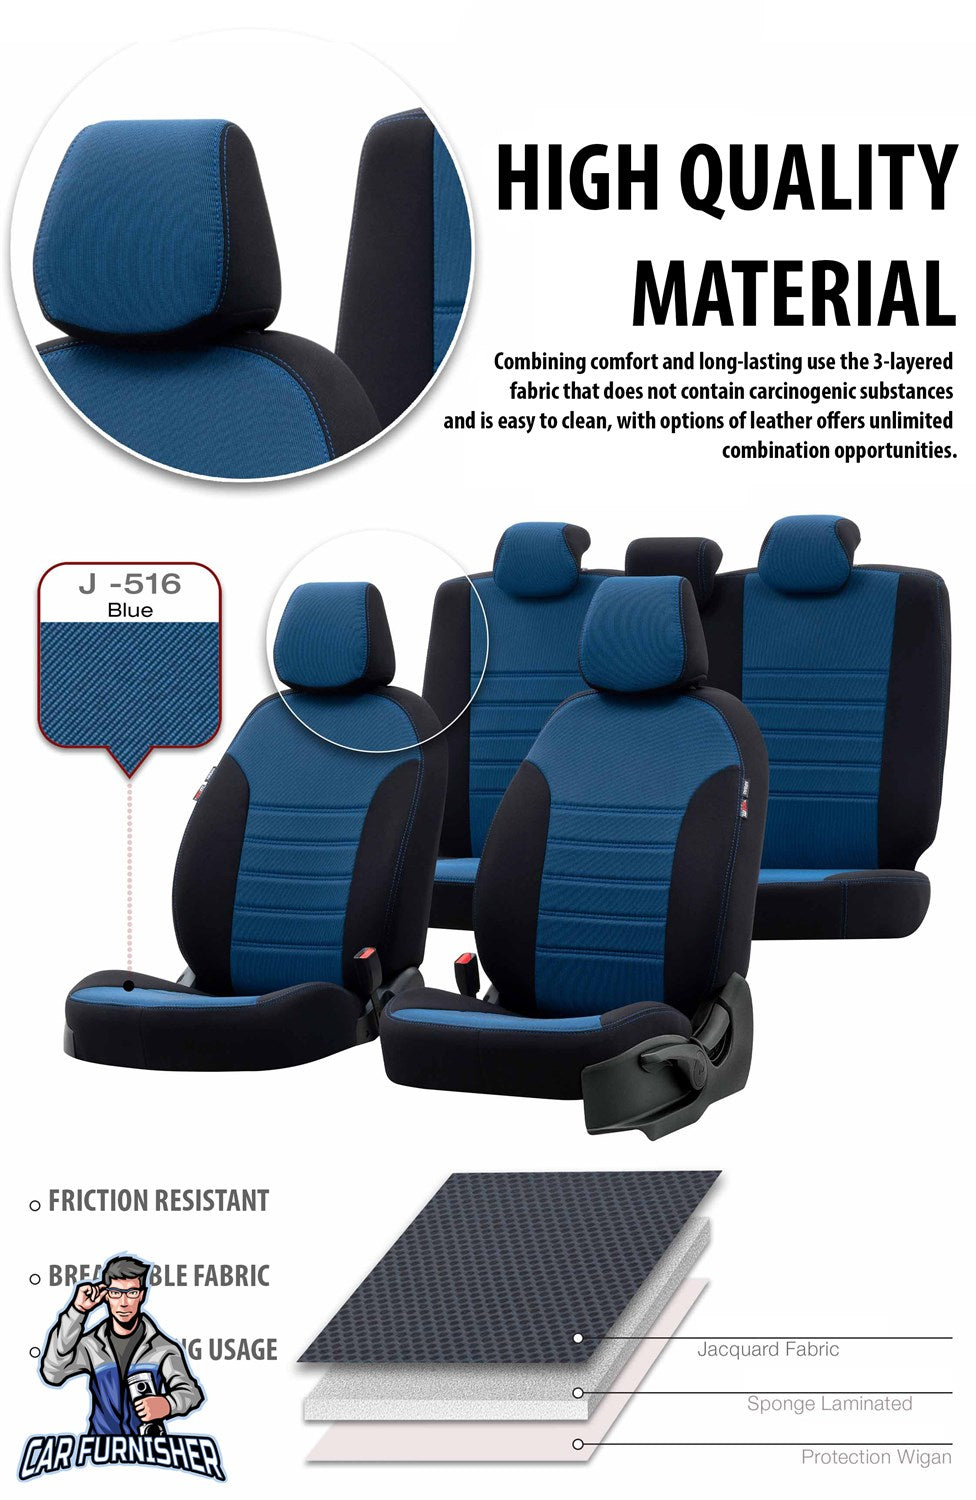 Dfm Succe Seat Covers Original Jacquard Design Dark Beige Jacquard Fabric